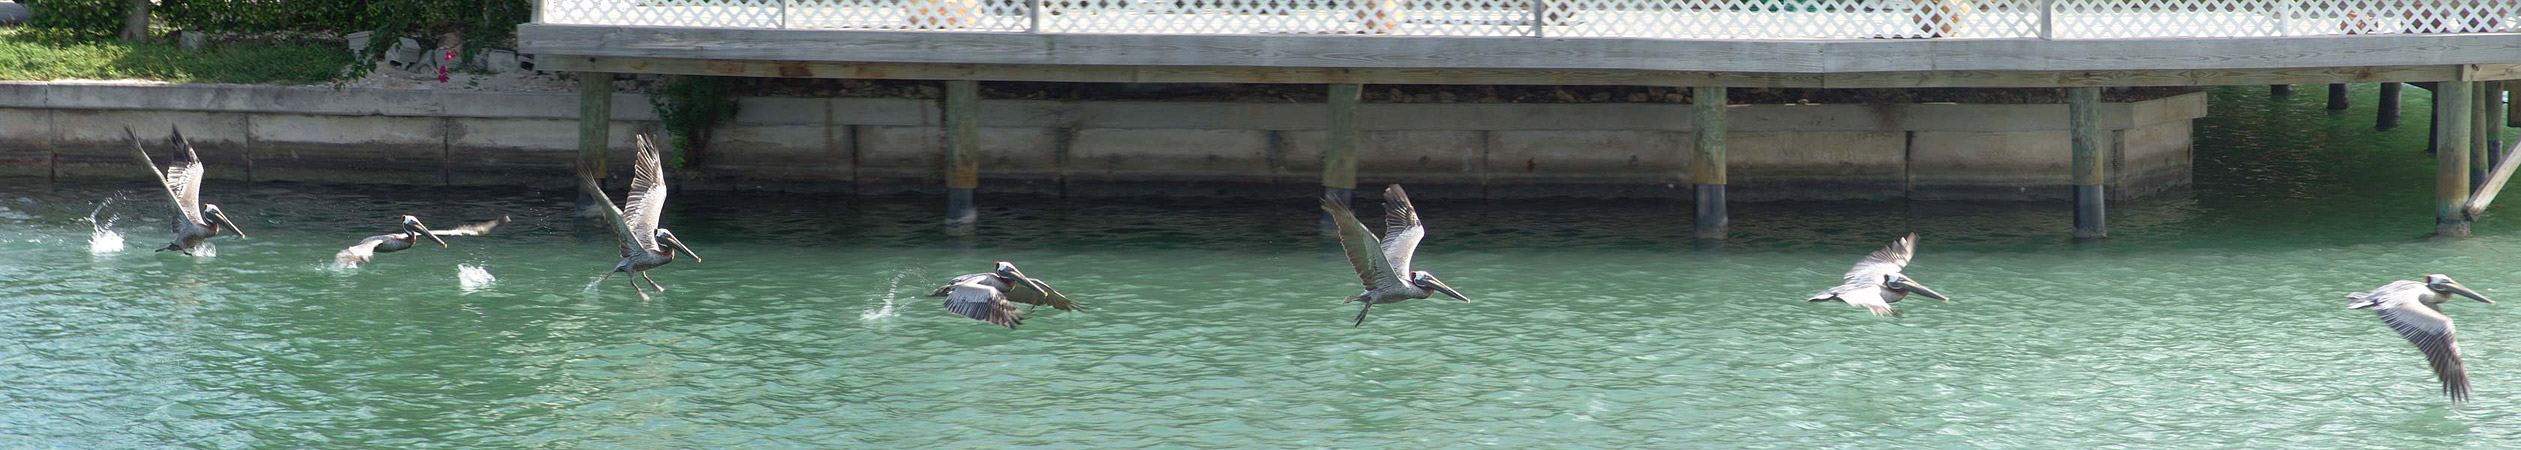 Pelican taking Flight (Large Image)